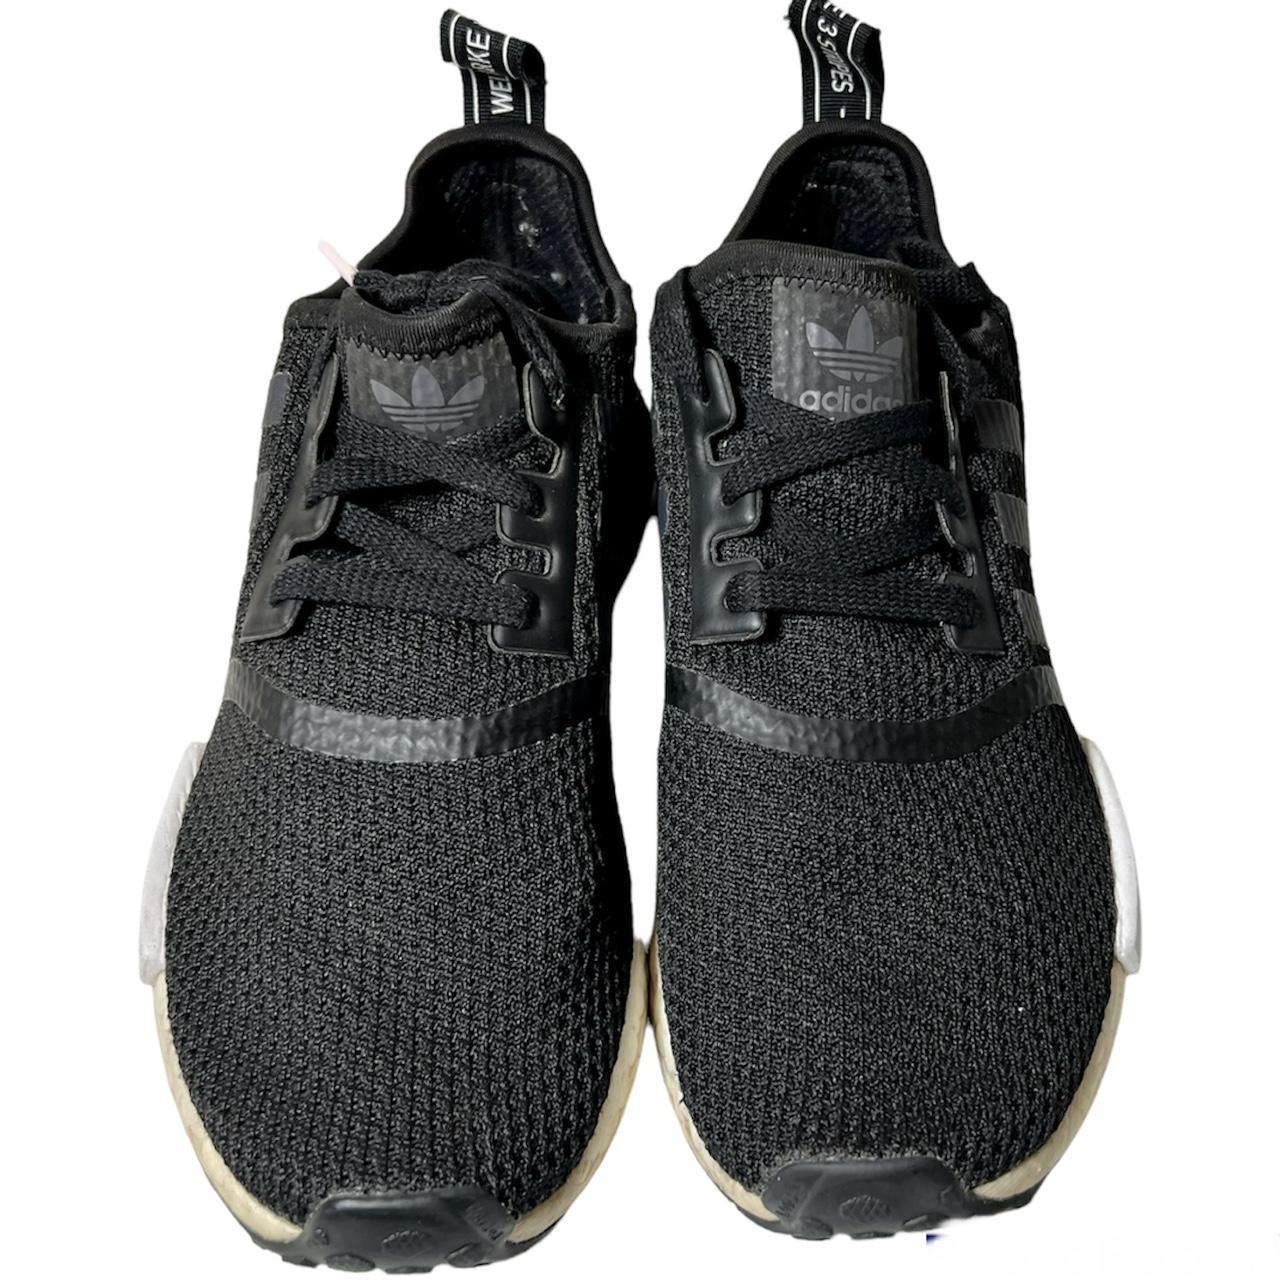 Adidas NMD R1 Boost Running Shoes B37649 Black Clear... - Depop